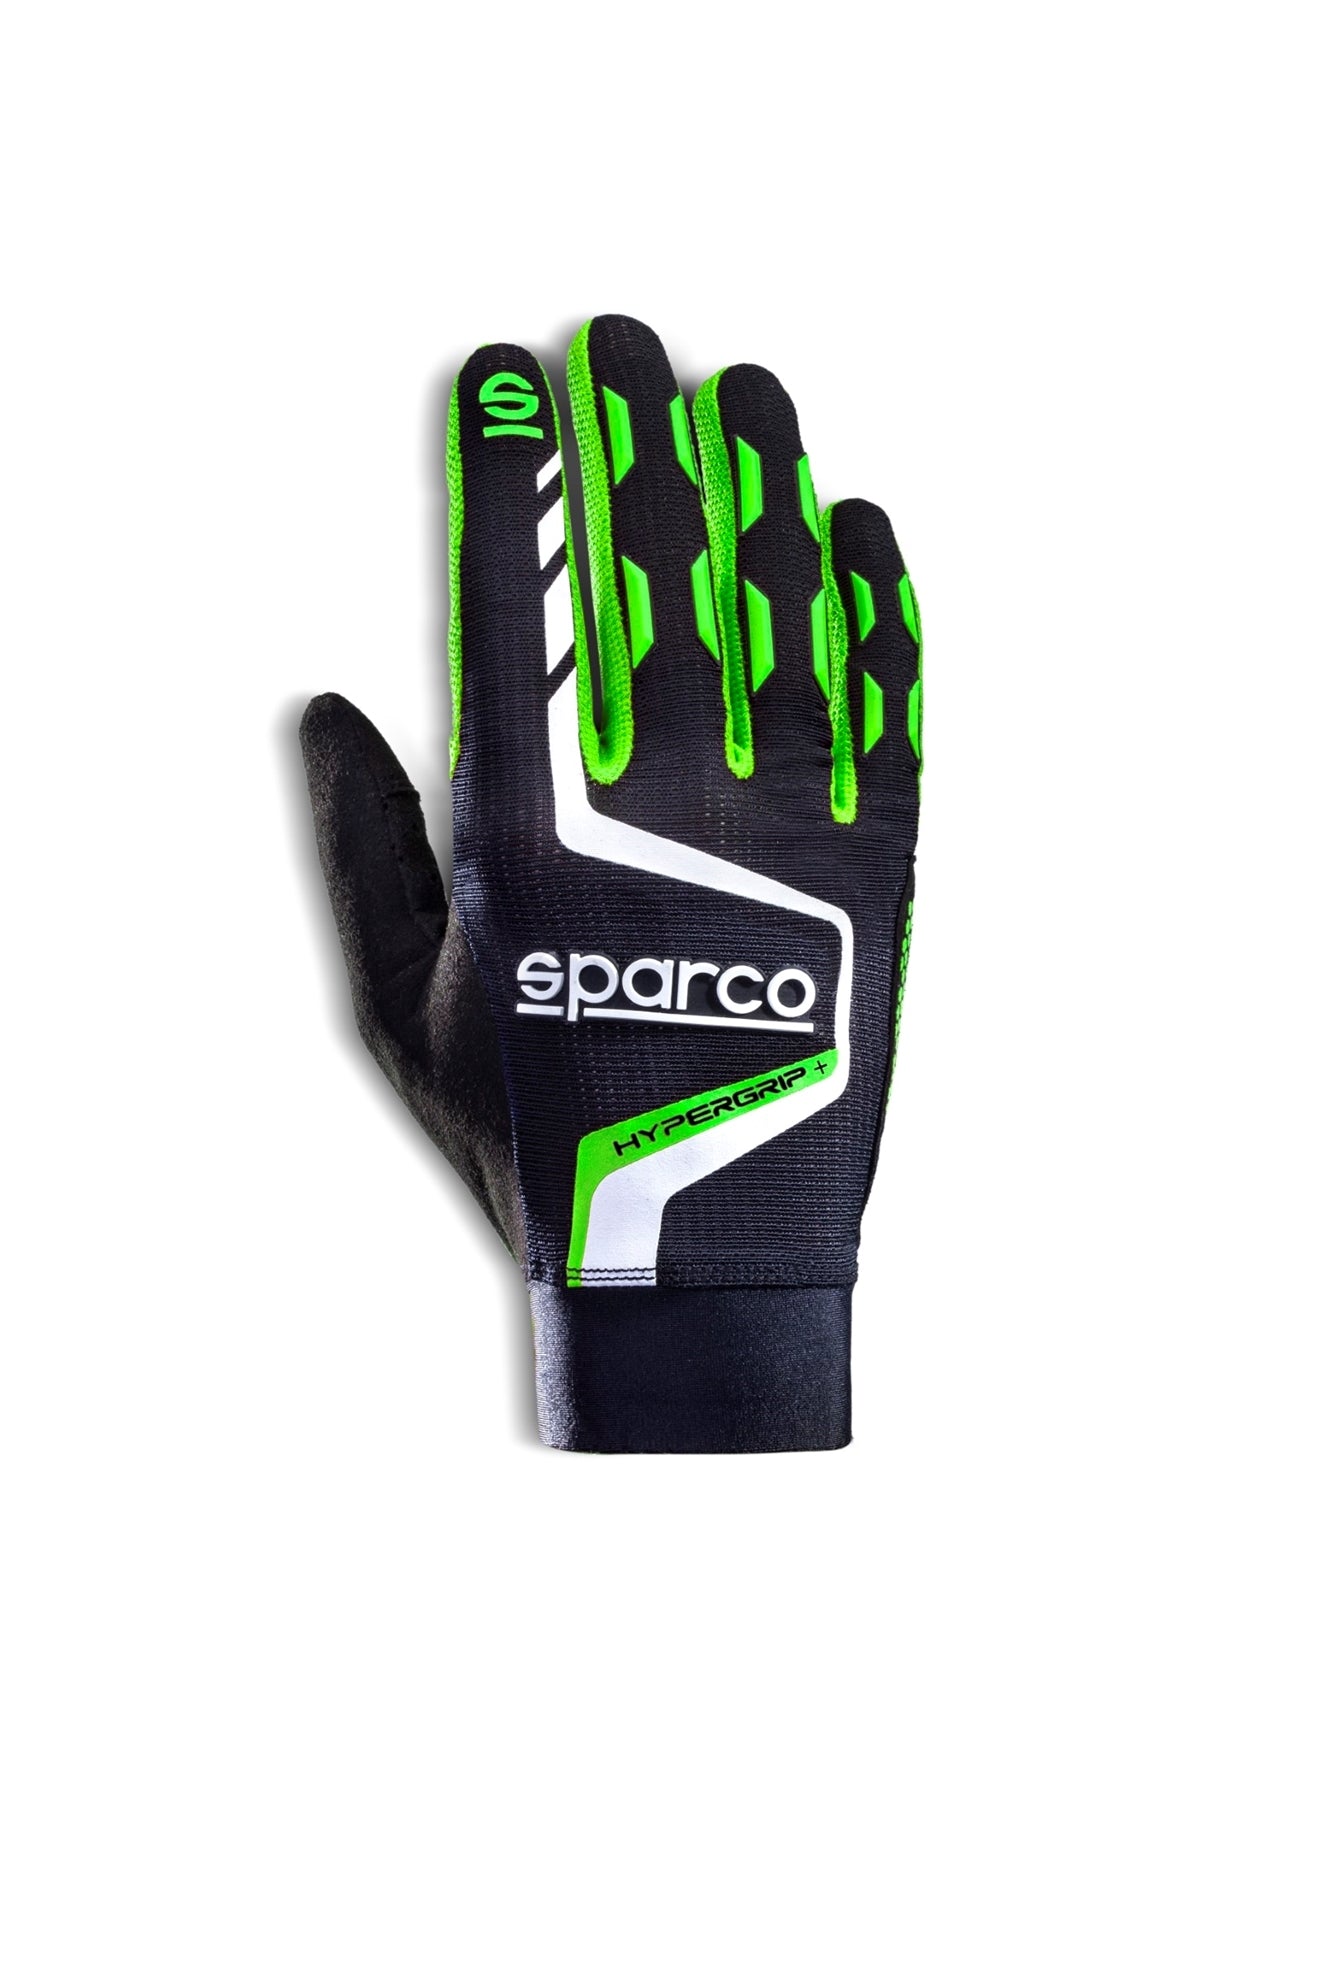 Sparco Hypergrip+ Sim Racing Gloves